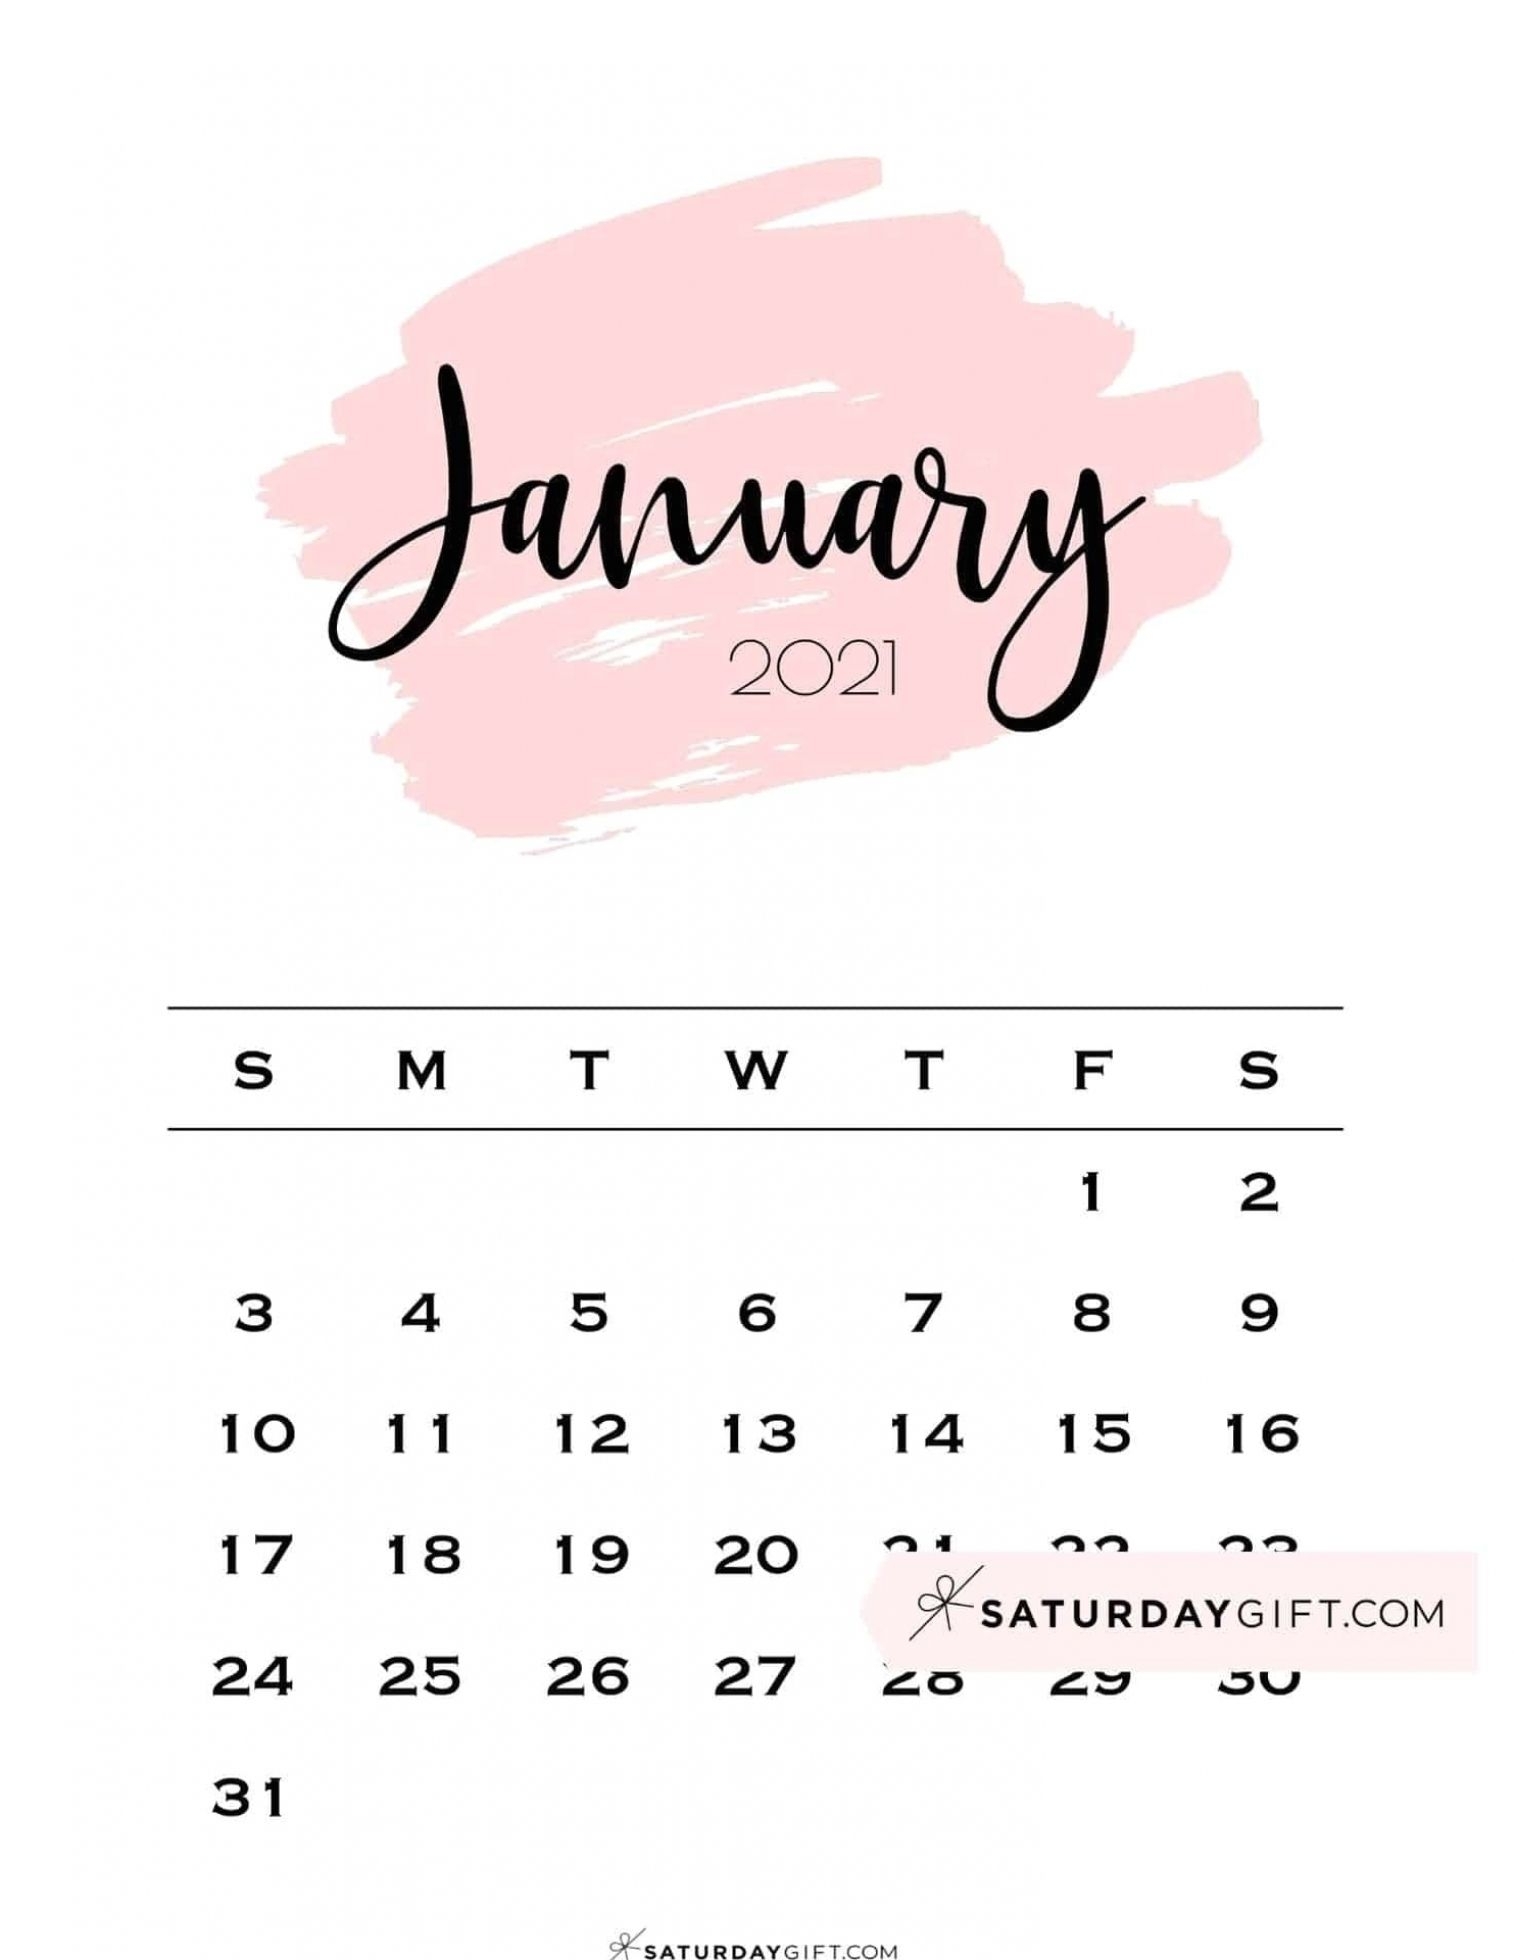 Printable Calendar 2021 | January 2021 - December 2021